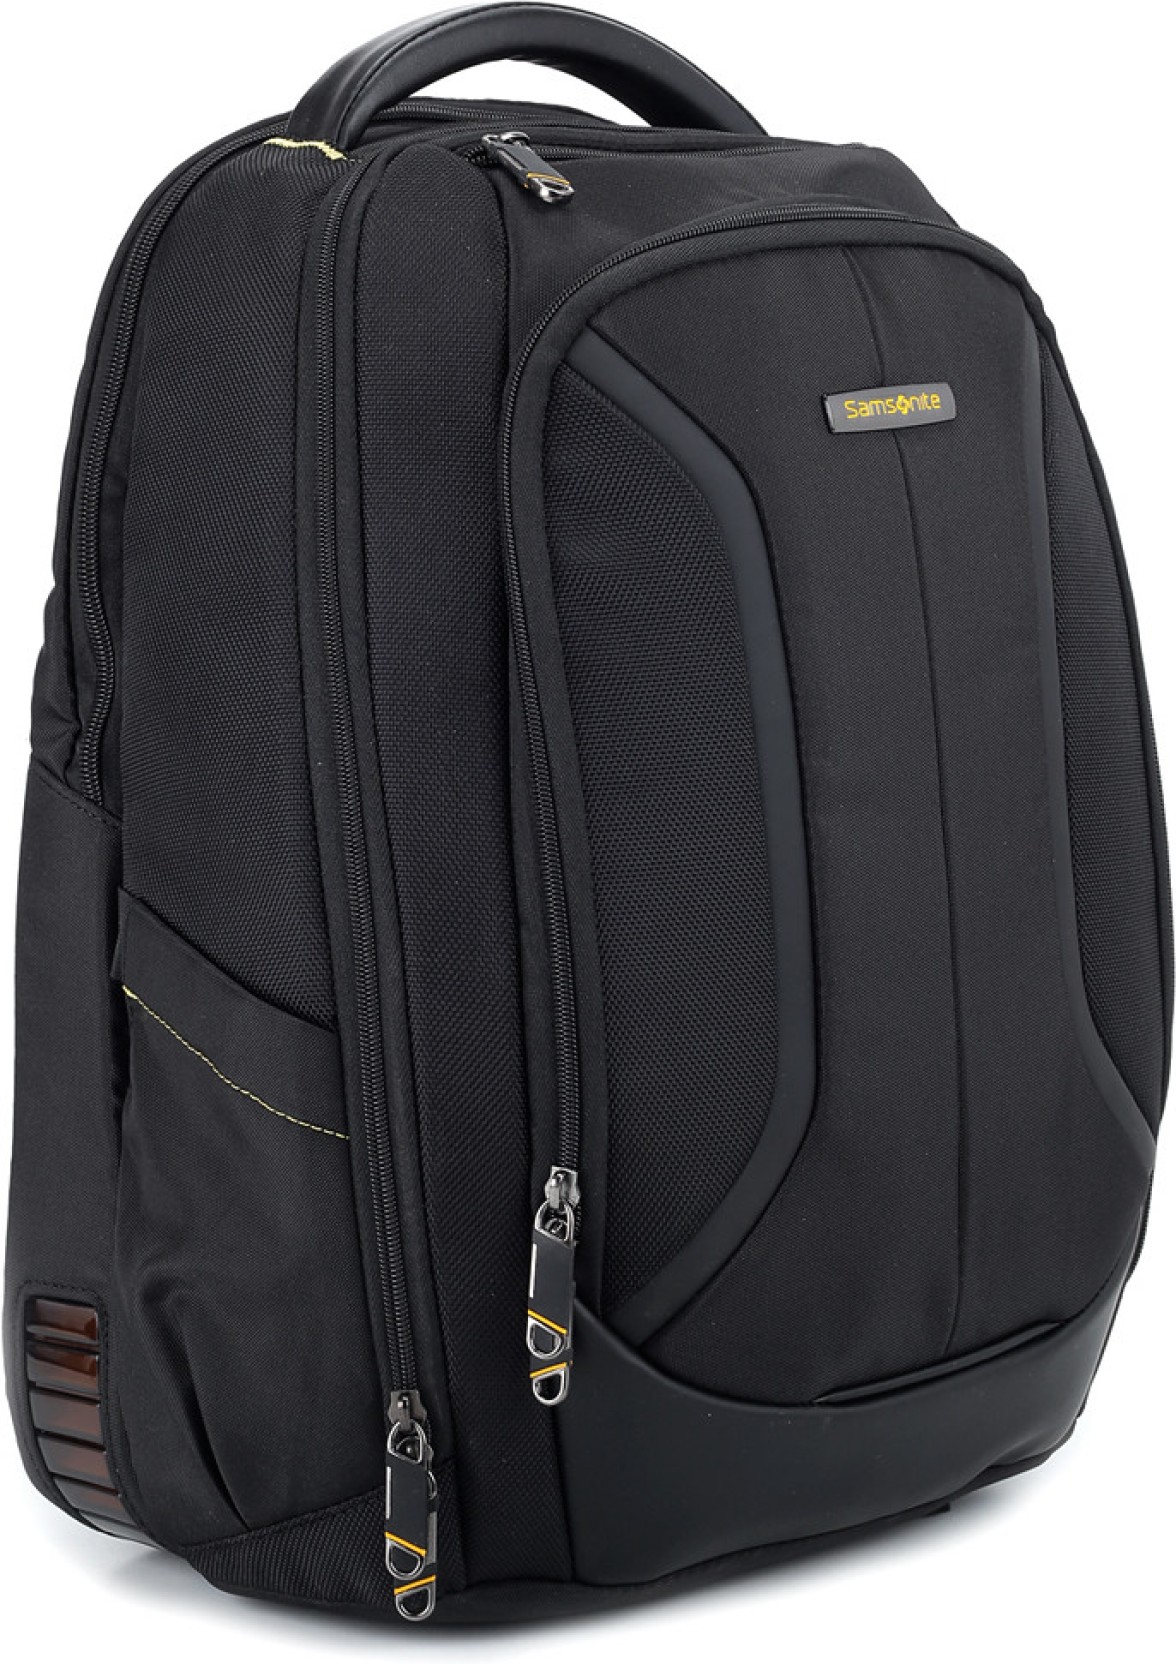 Samsonite Viz Air Plus Laptop Backpack Black - Price in India ...